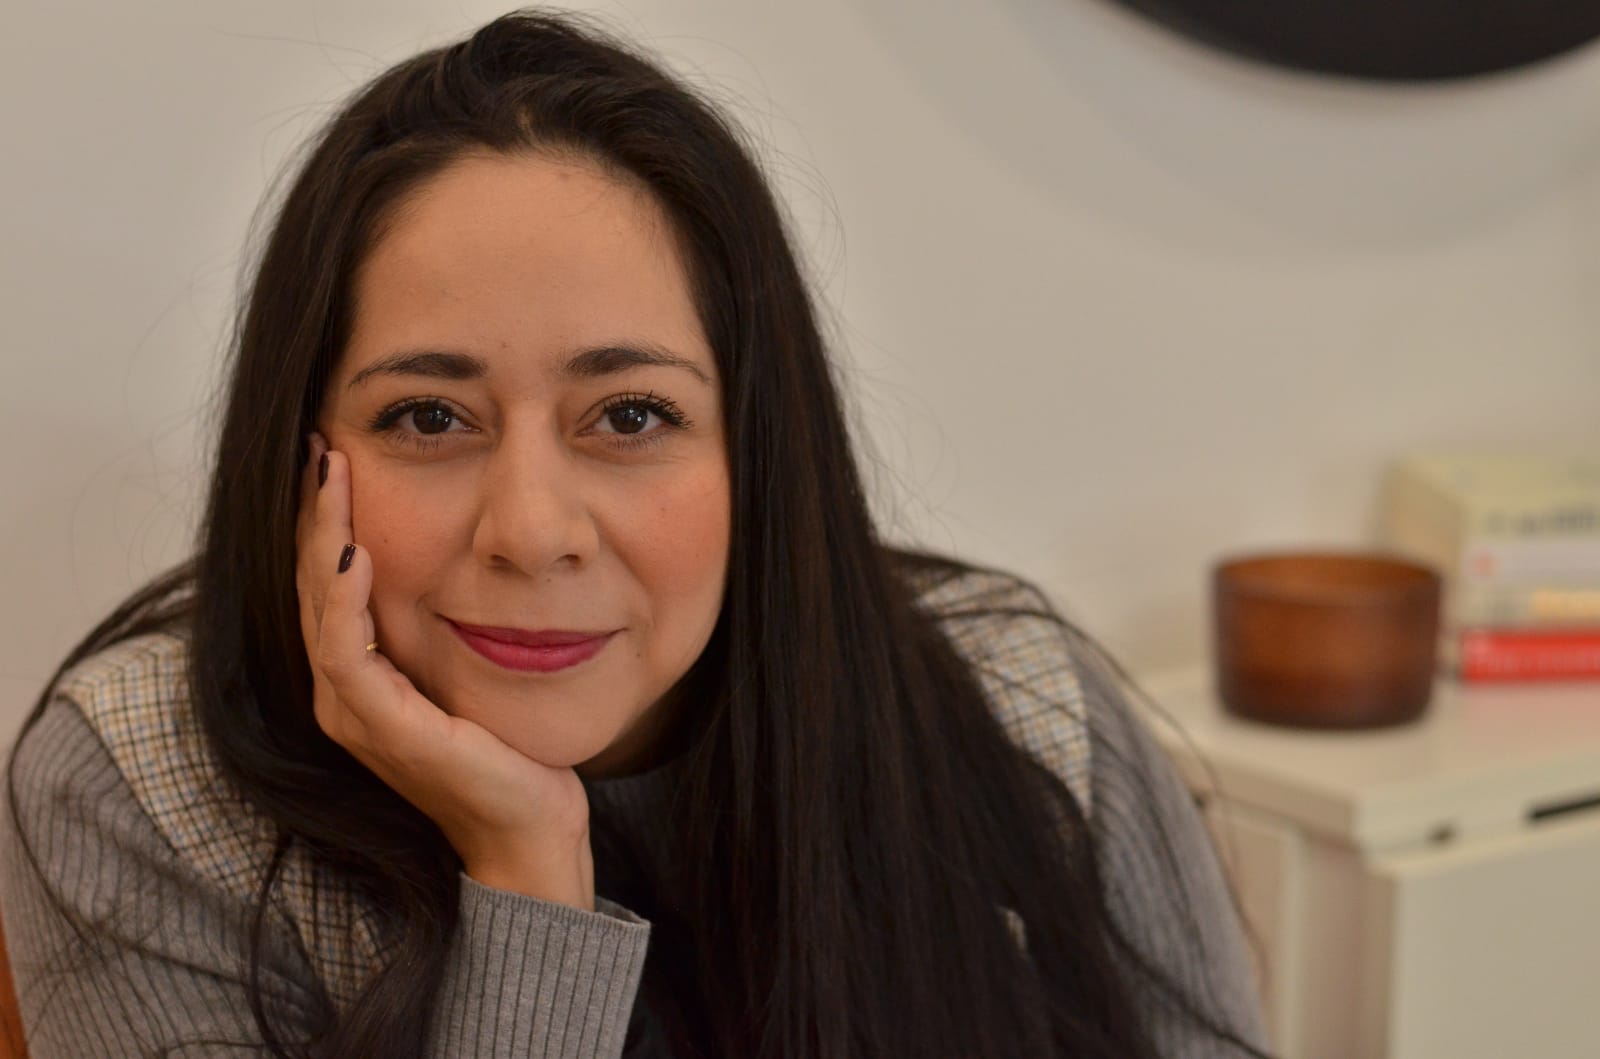 Psicoterapeuta sexologa y humanista Abigail Martinez miran